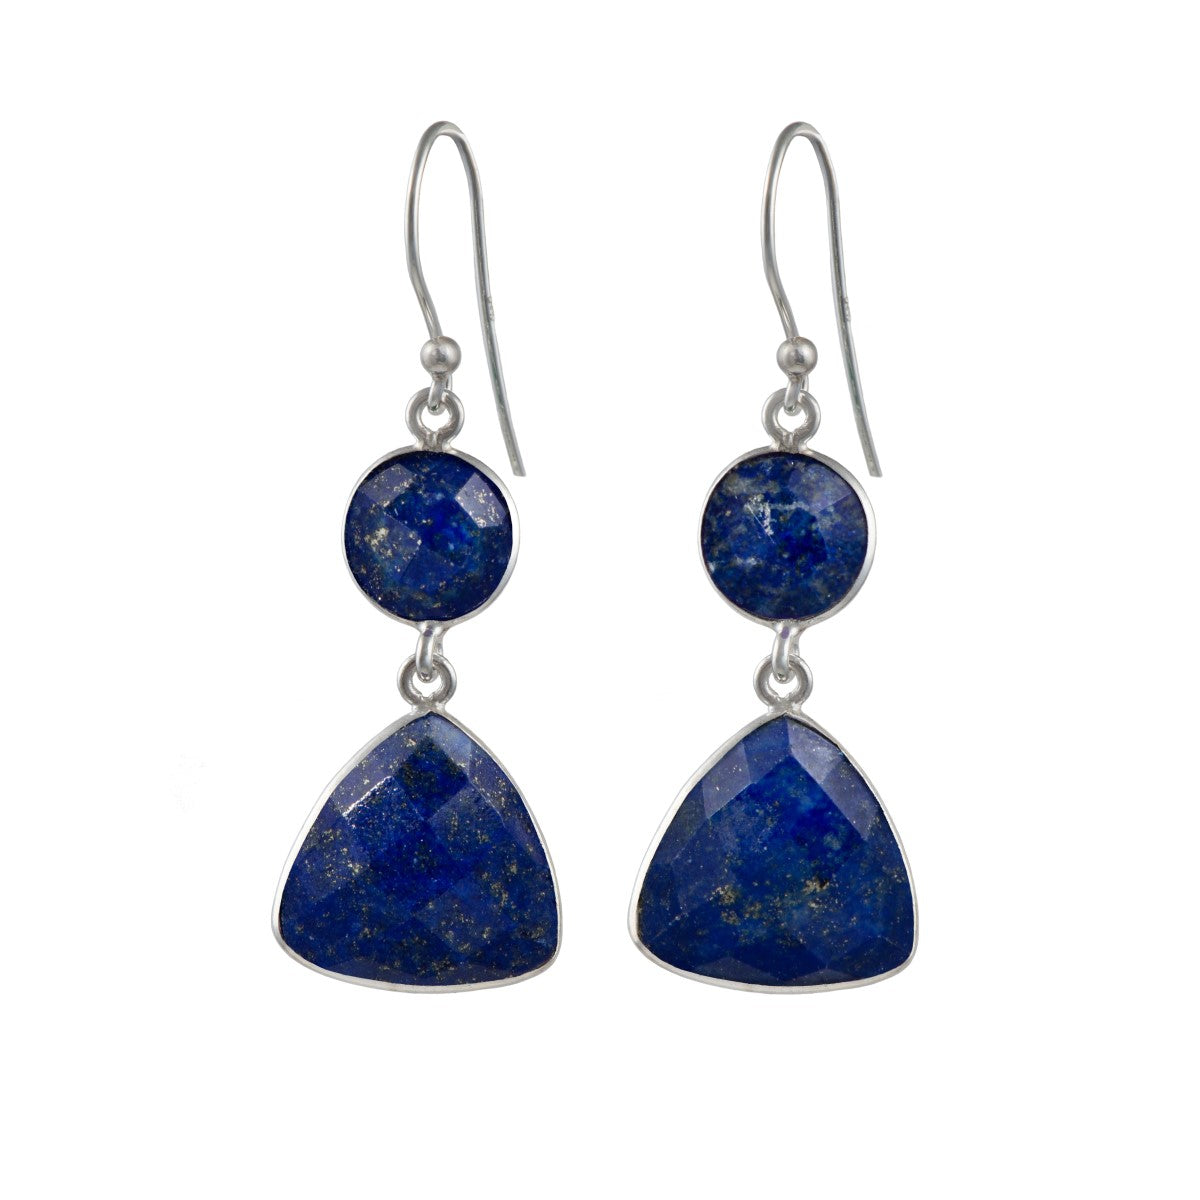 Lapis Lazuli Gemstone Earrings in Sterling Silver - Triangular